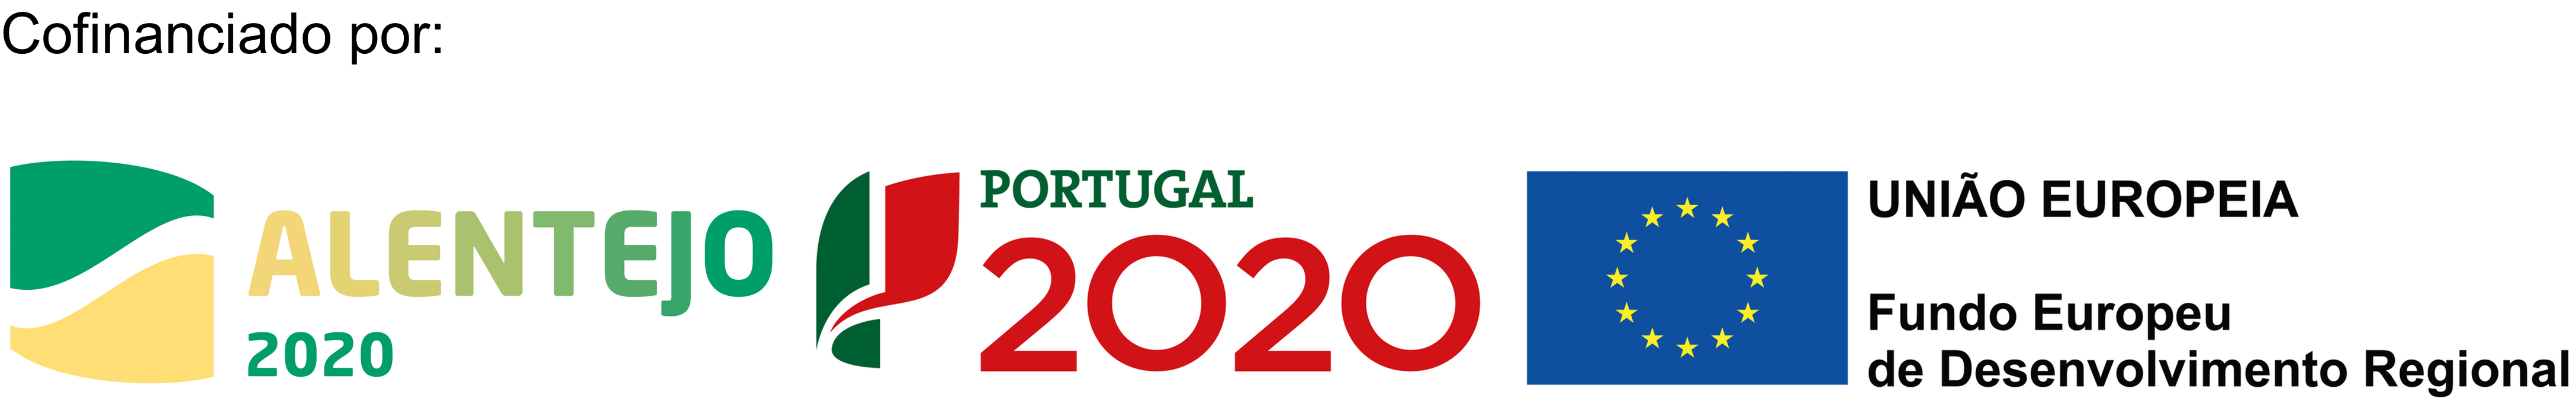 Portugal 2020 - INT